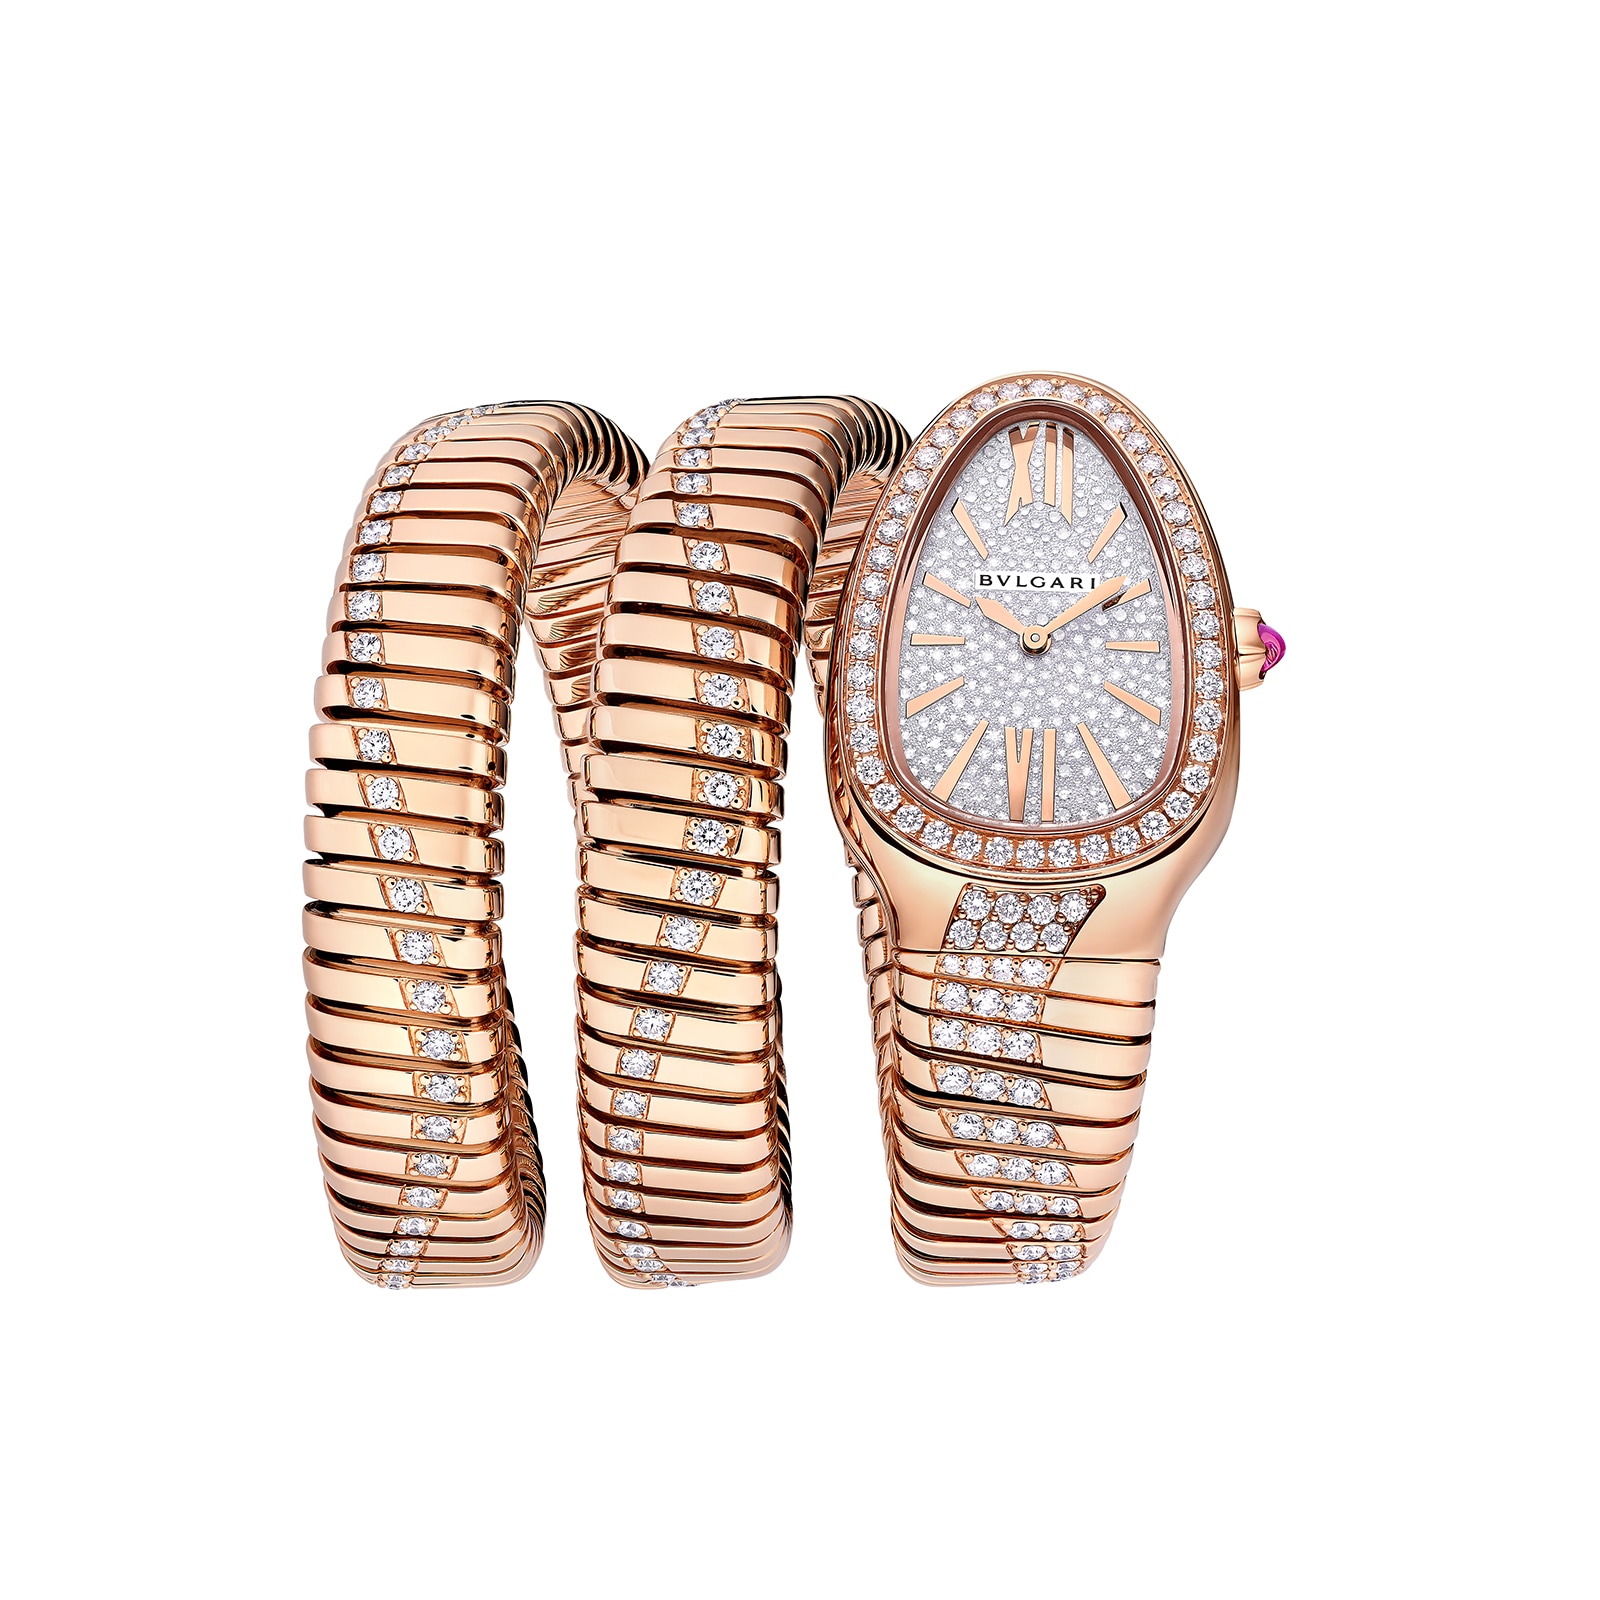 18k Rose Gold Serpenti Tubogas 35mm Diamond Dial Ladies Watch